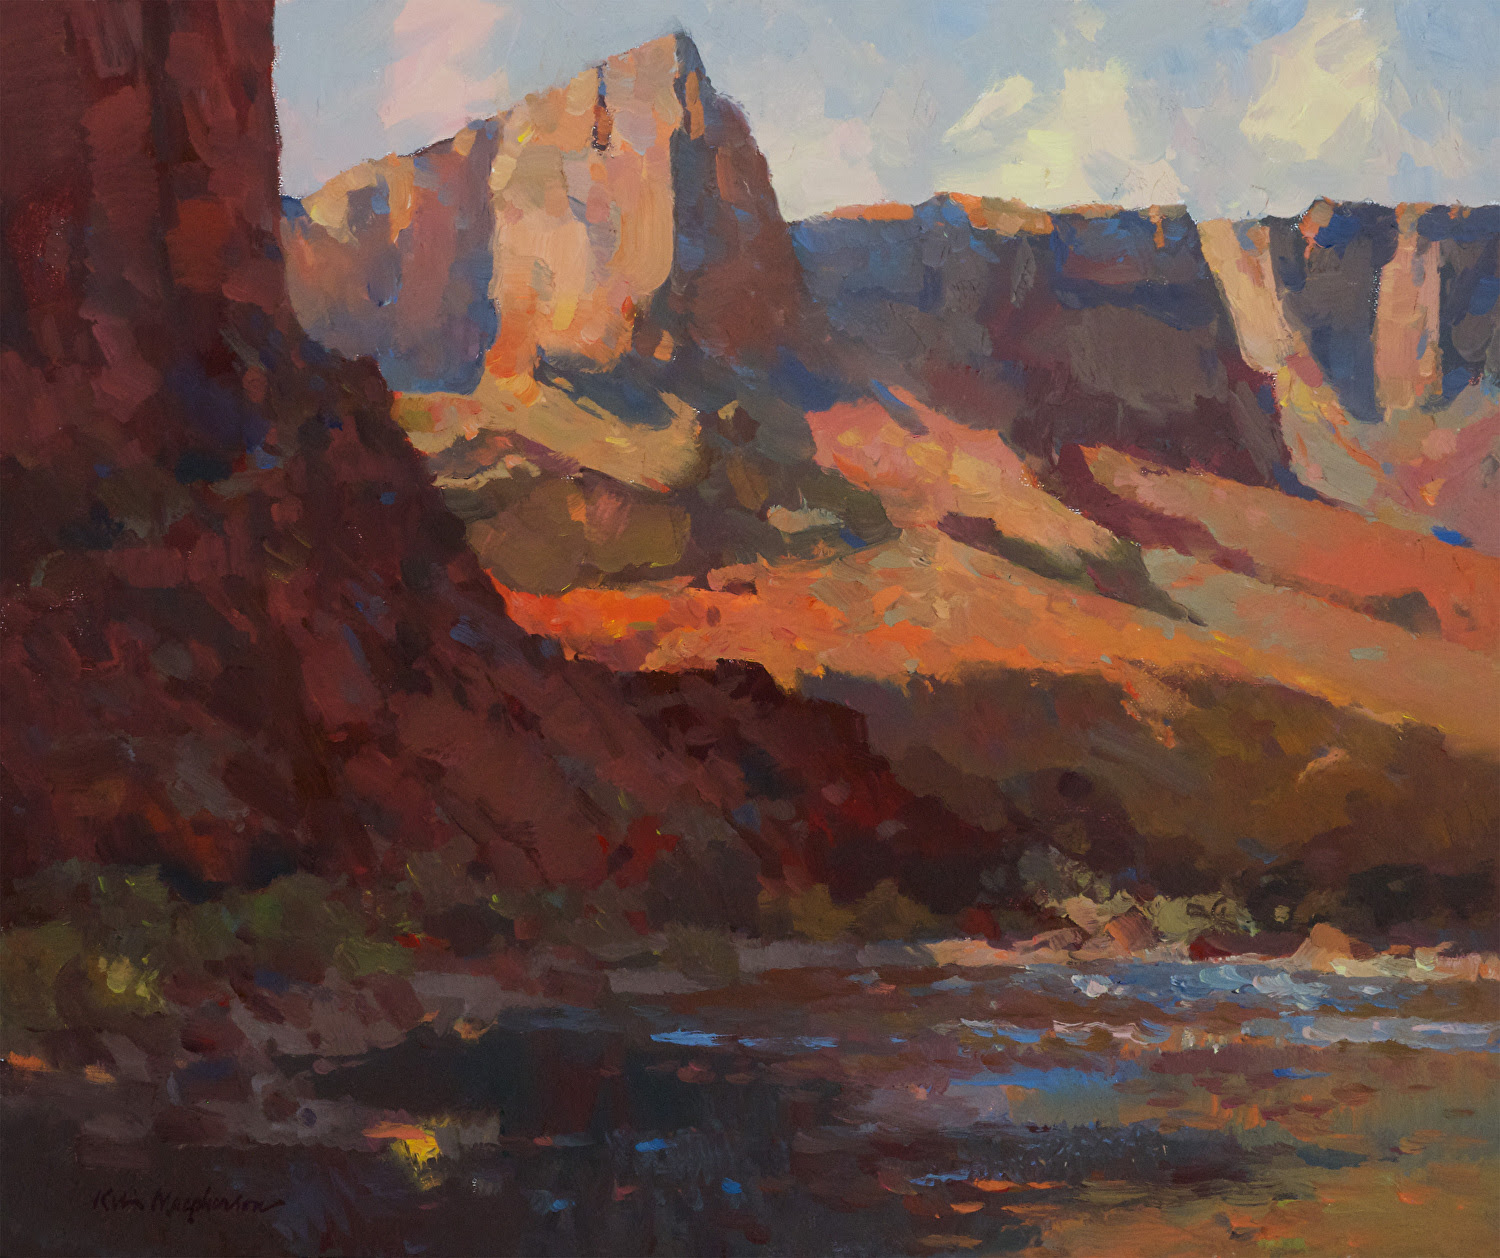 Kevin Macpherson, “Grand Canyon 1